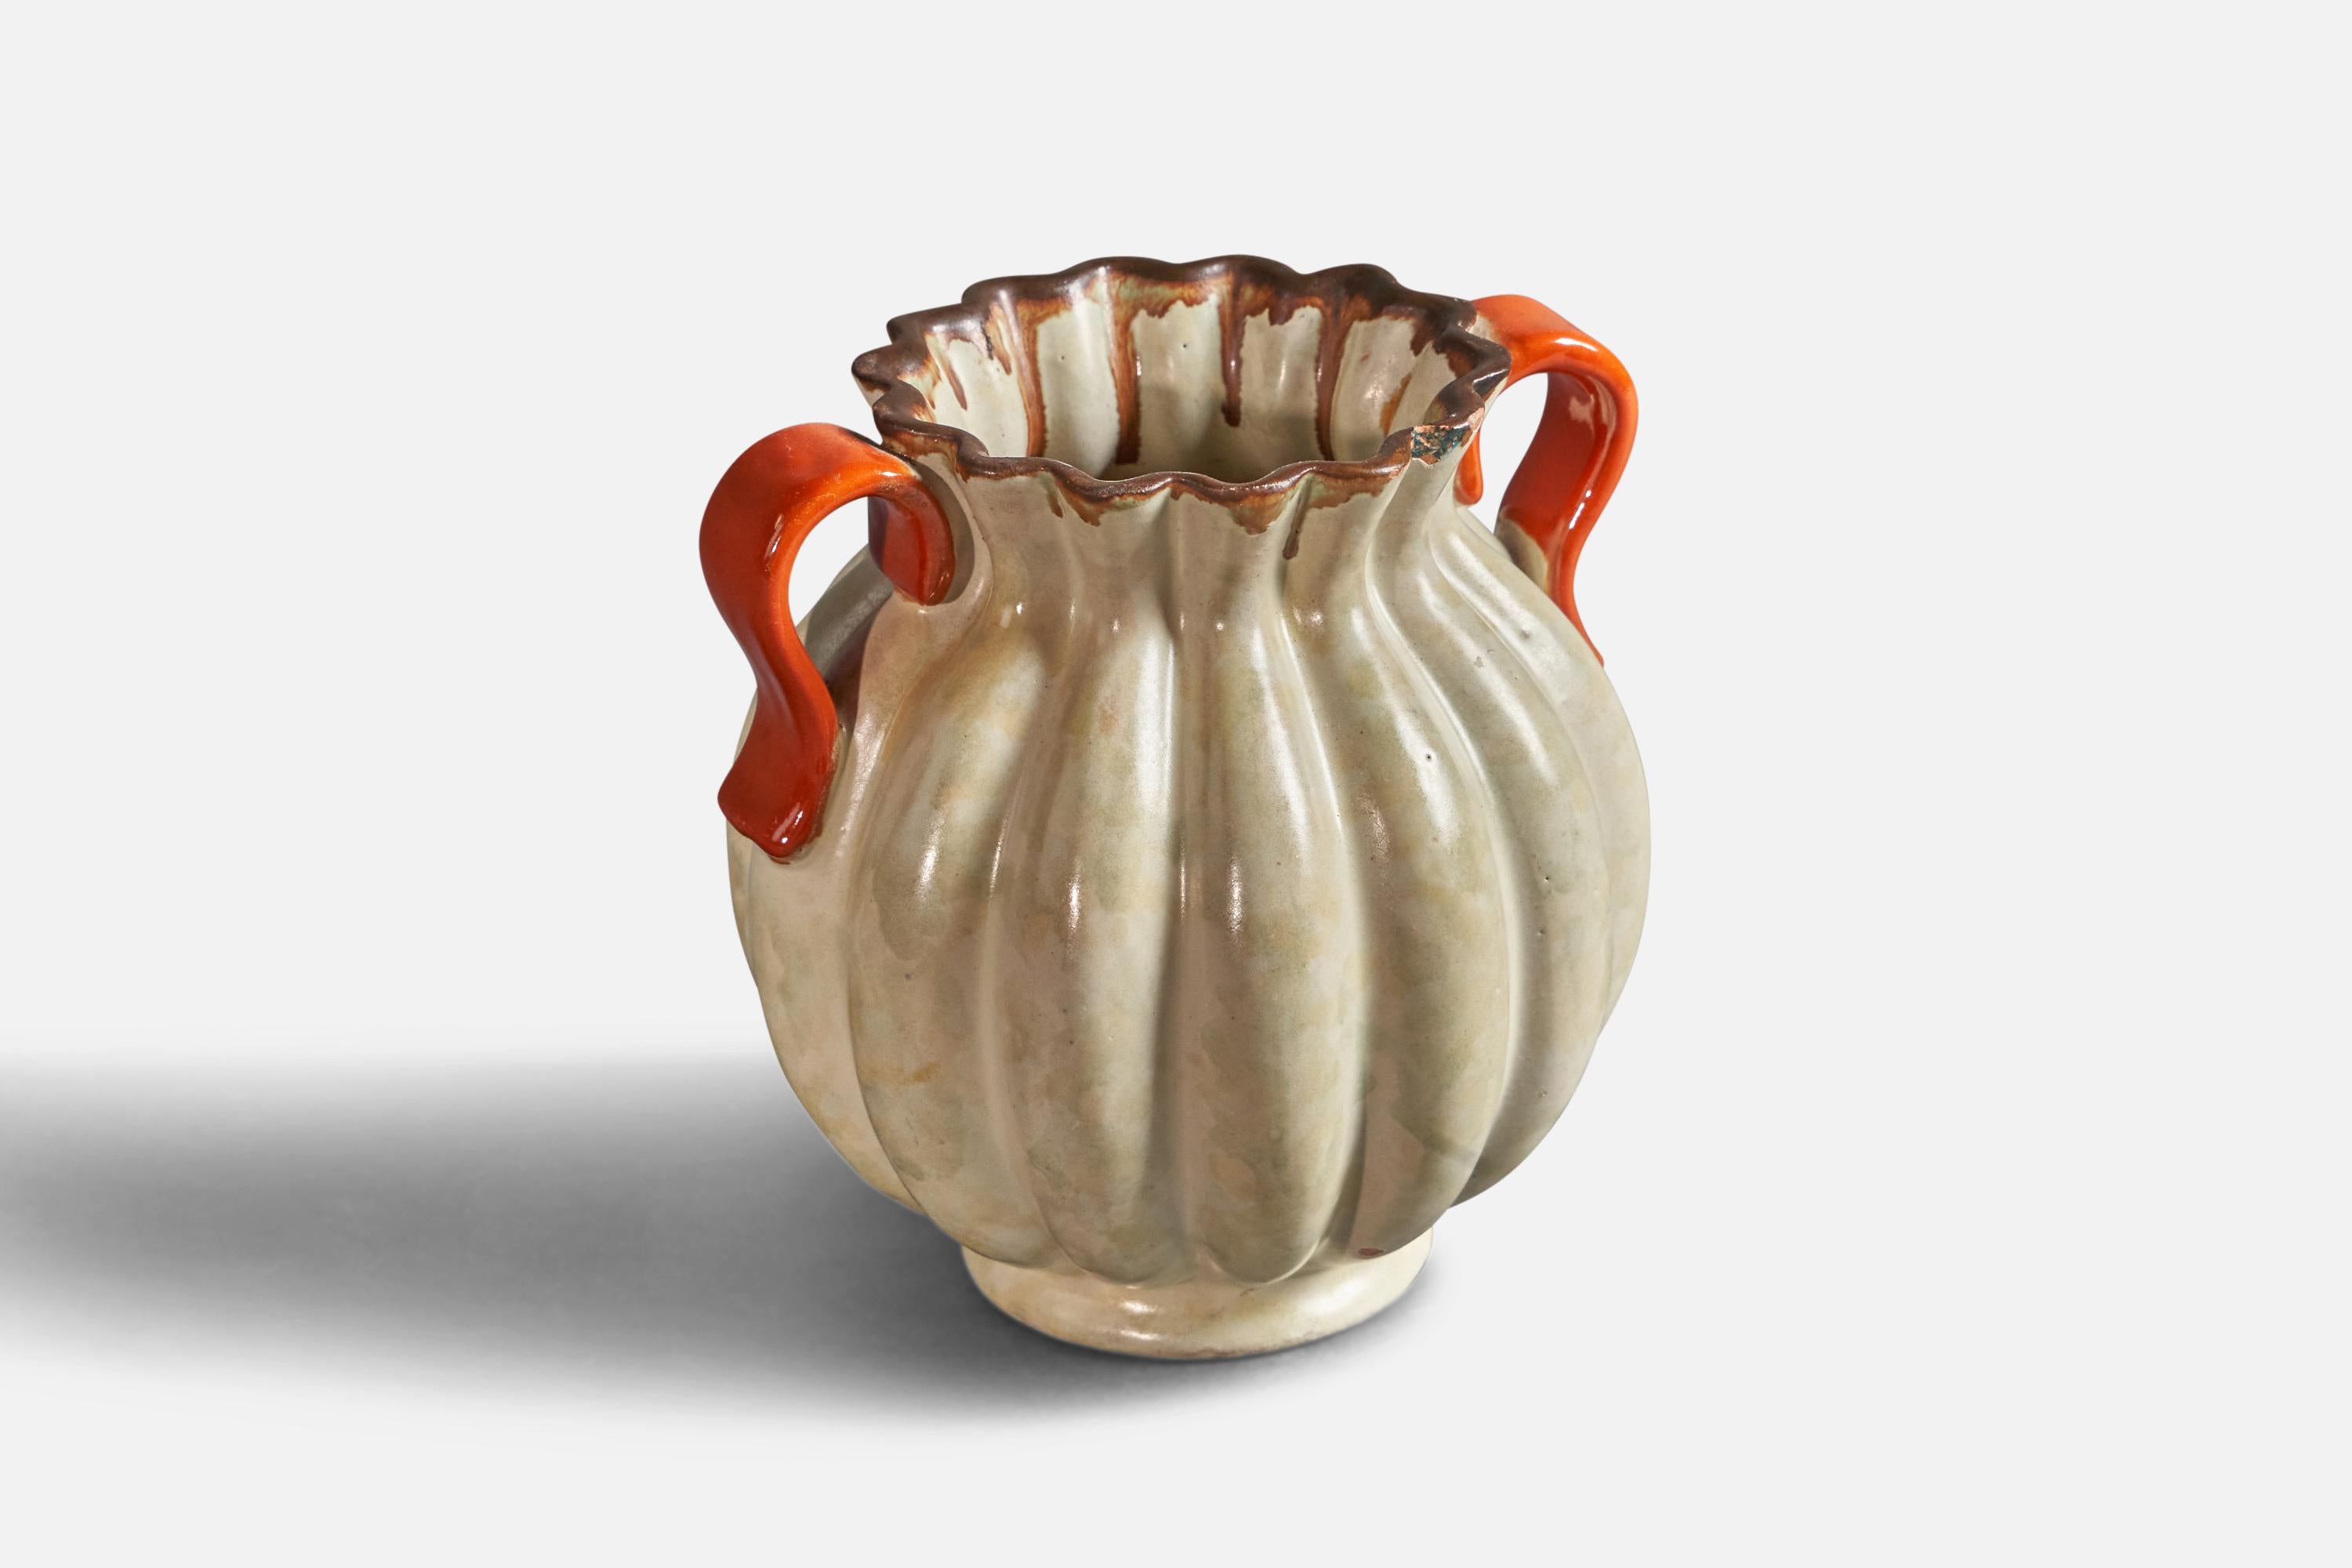 A beige and orange-glazed earthenware vase, designed and produced by Upsala Ekeby, Sweden, 1930s.